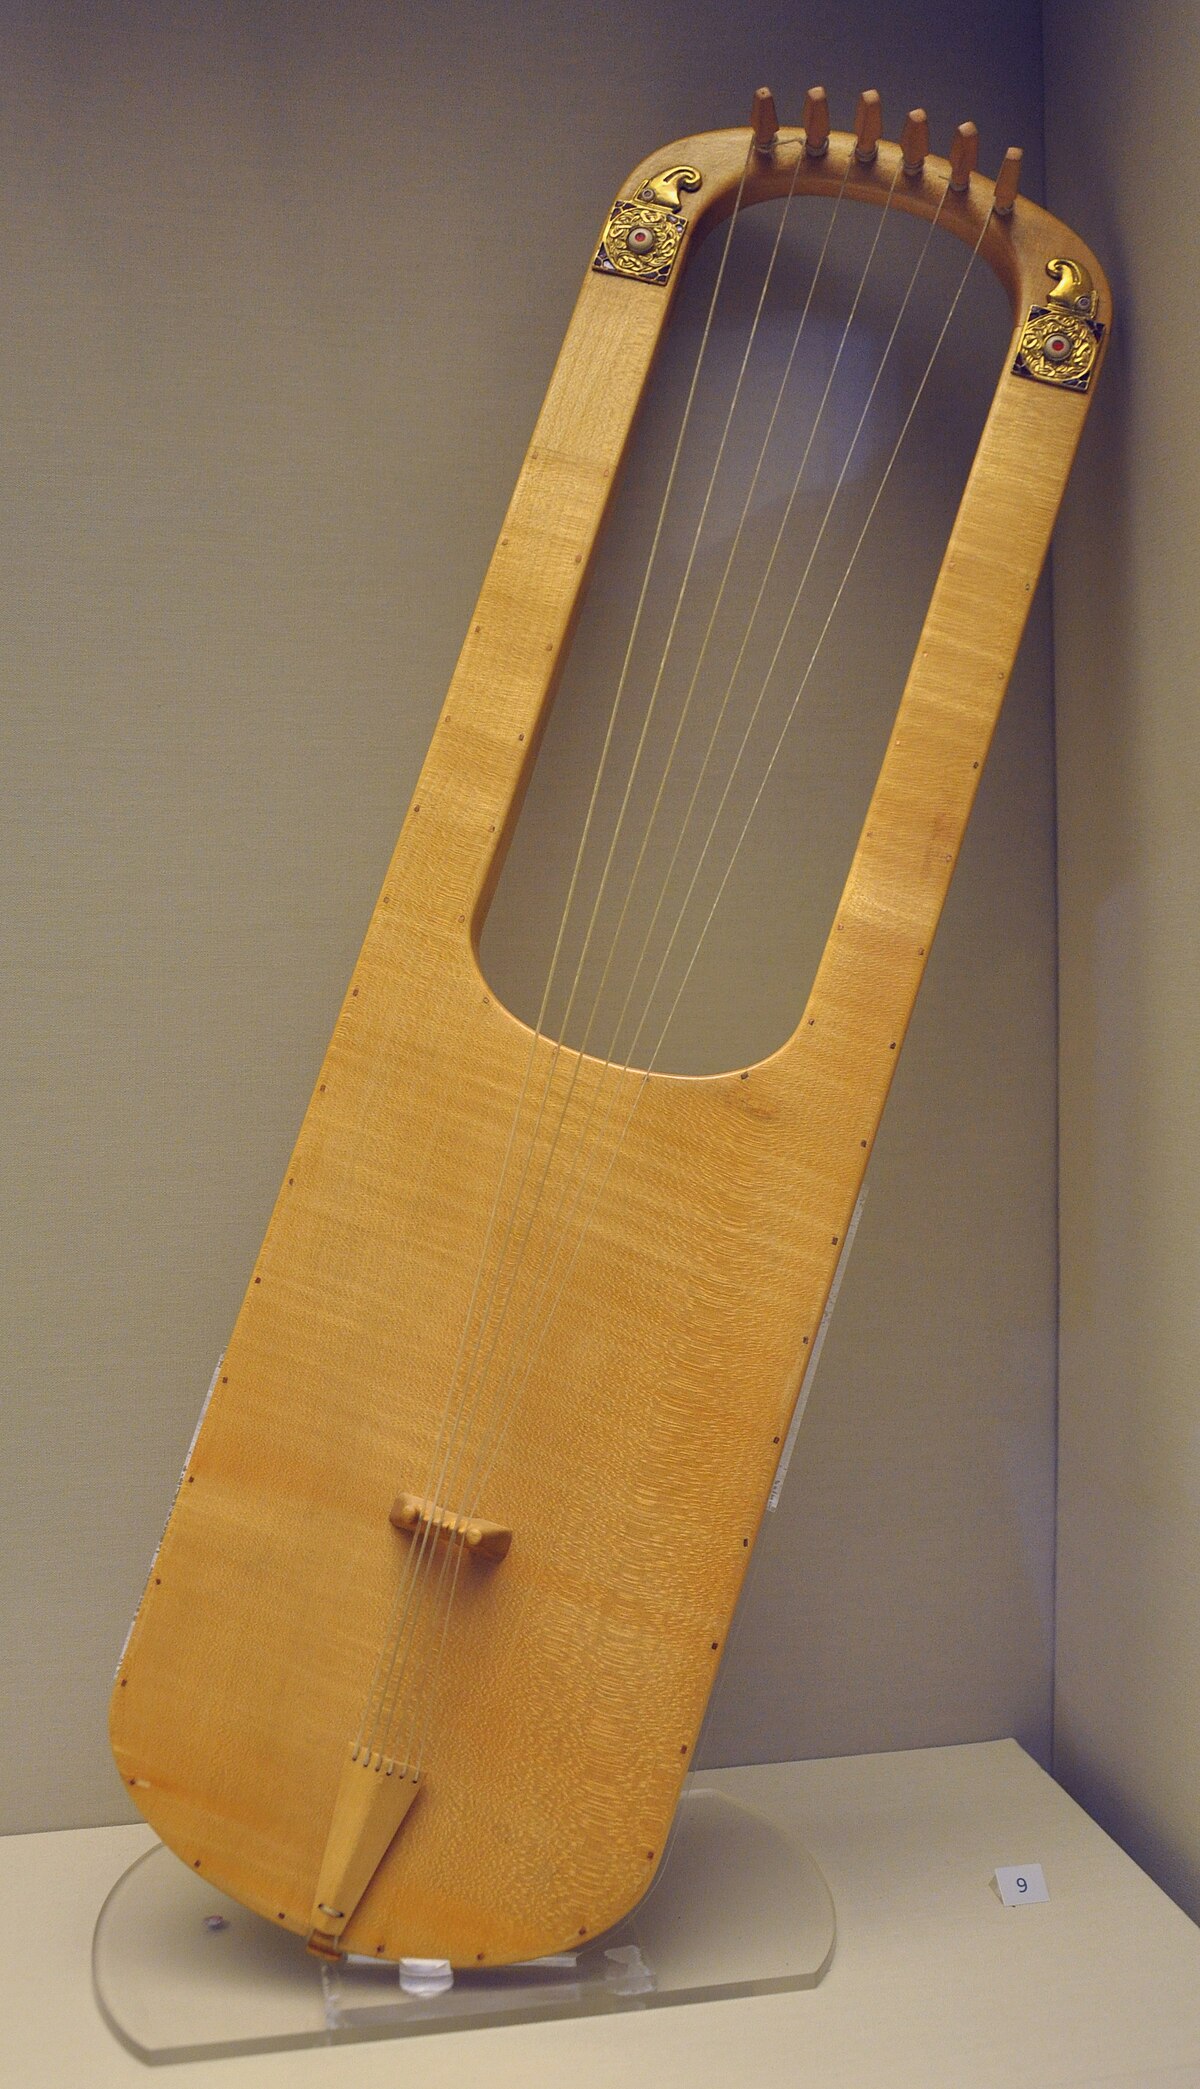 Anglo-Saxon lyre - Wikipedia